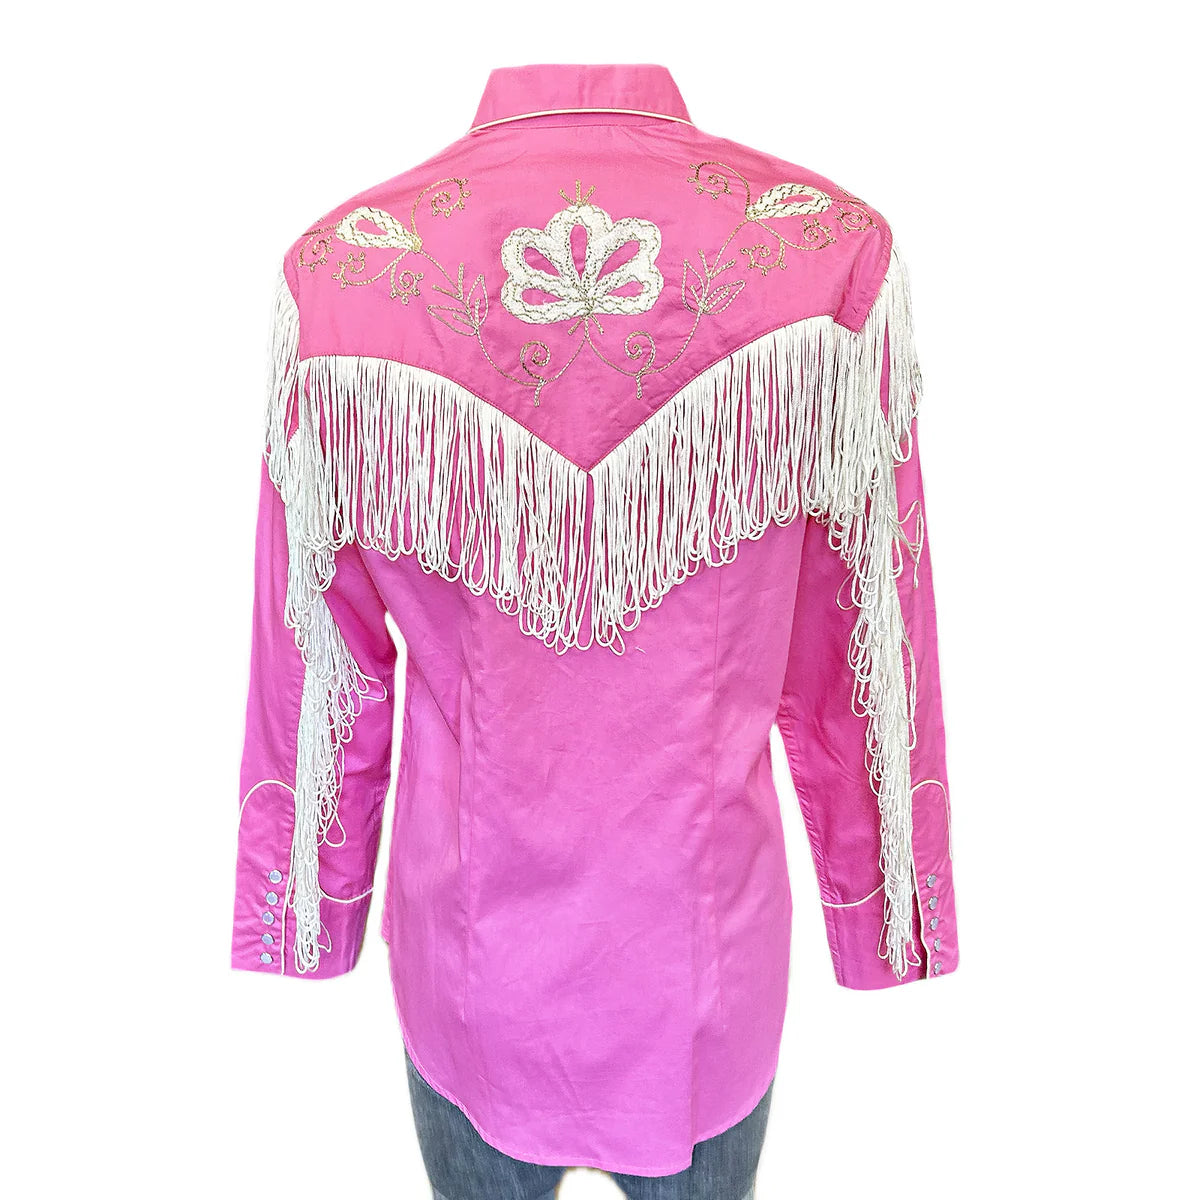 Rockmount Ranch Wear Ladies' Vintage Inspired Fancy Fringe Shirt Pink Front